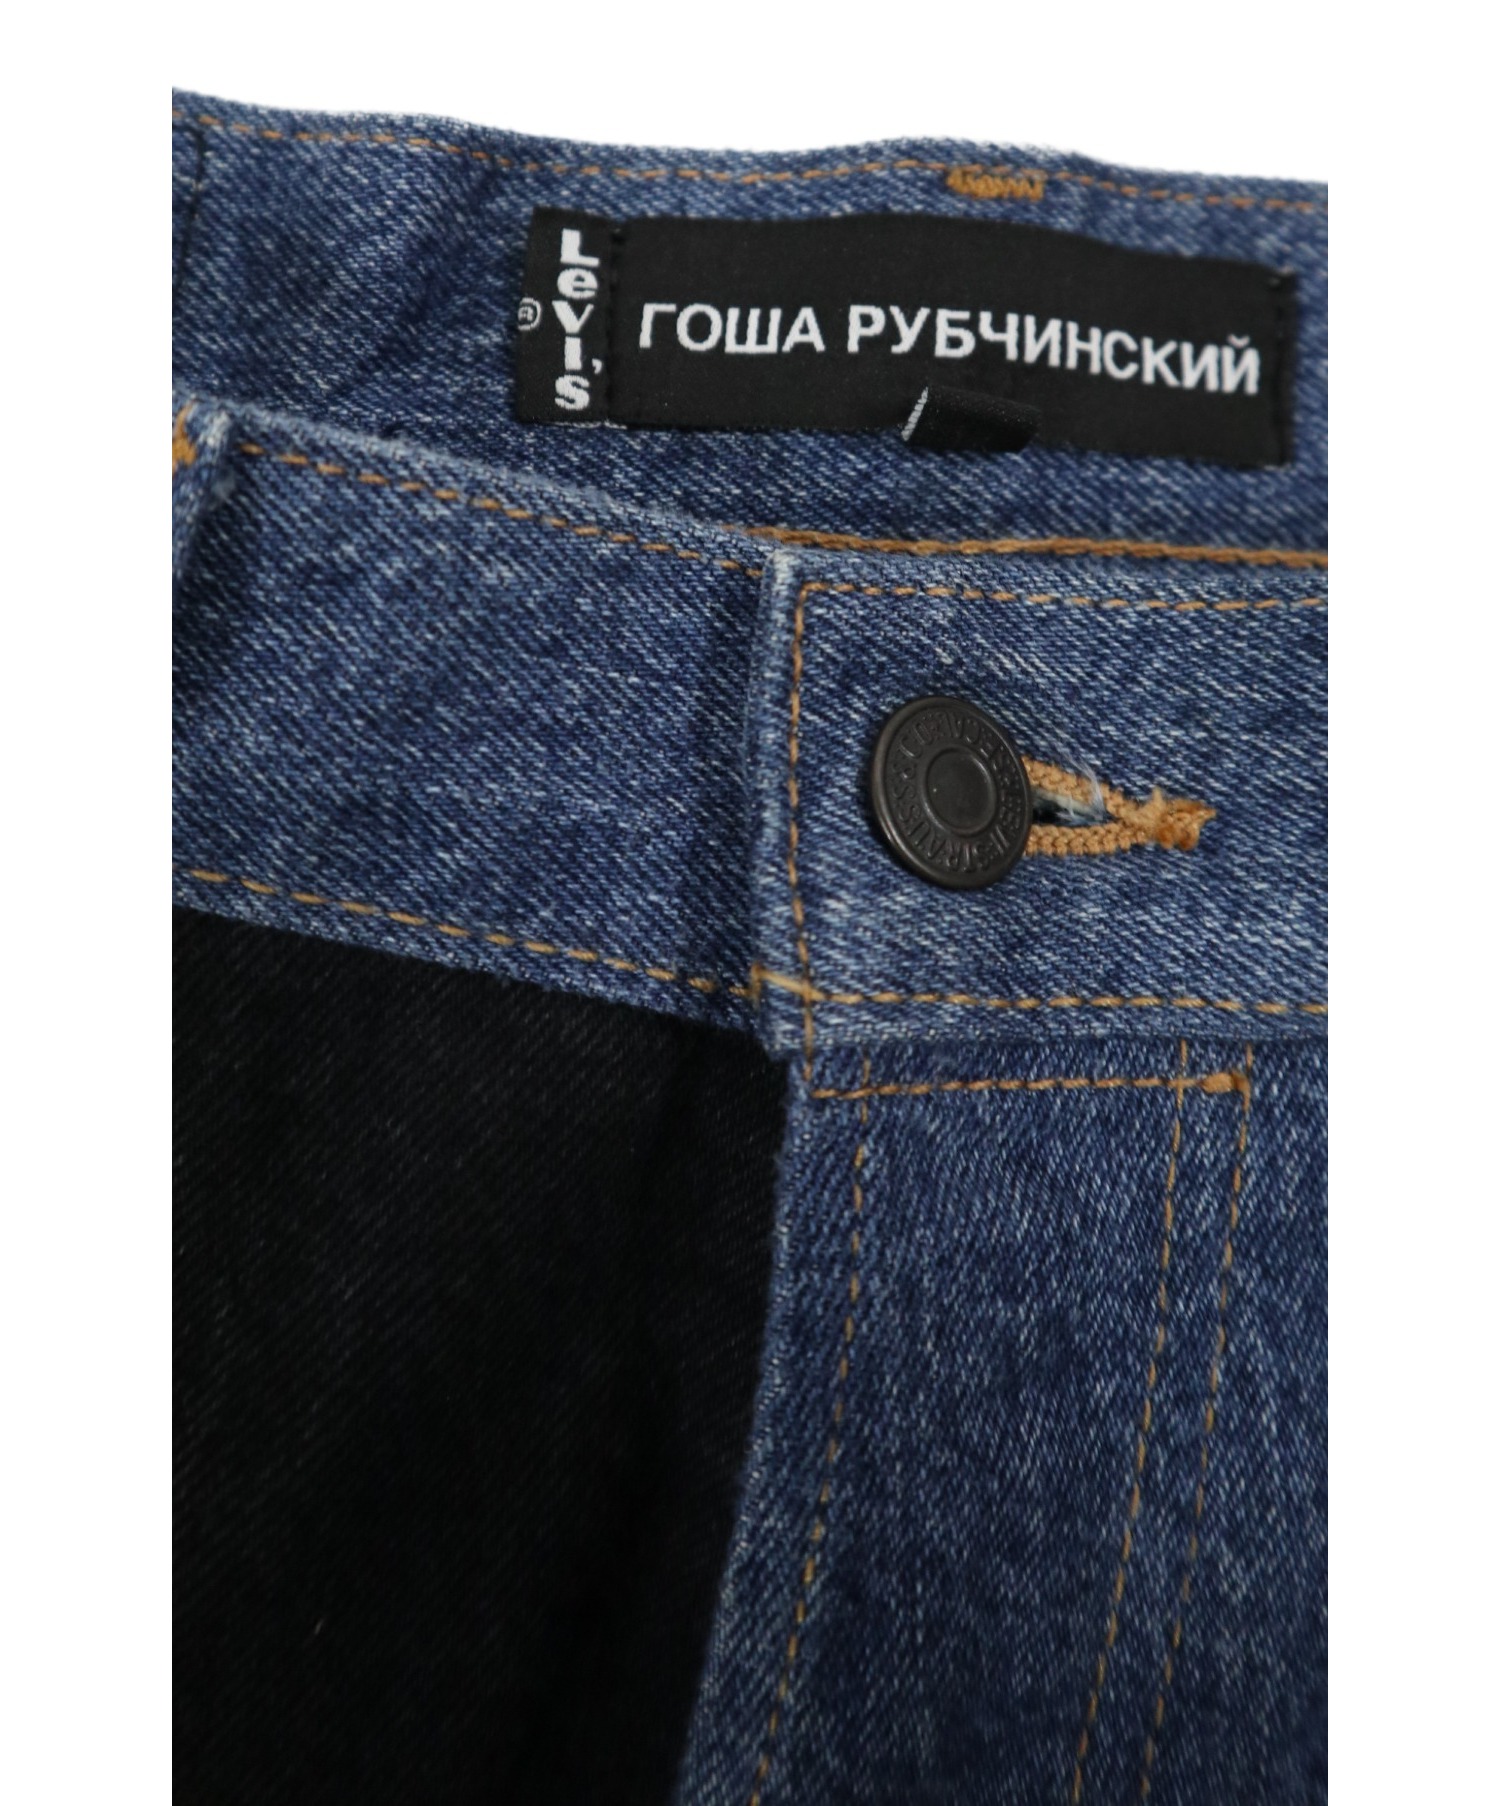 Gosha Rubchinskiy× x LEVI'S (ゴーシャラブチンスキー×リーバイス) 構築デニムパンツ スカイブルー サイズ: 76cm  (W30) 501 Patchwork trousers pant